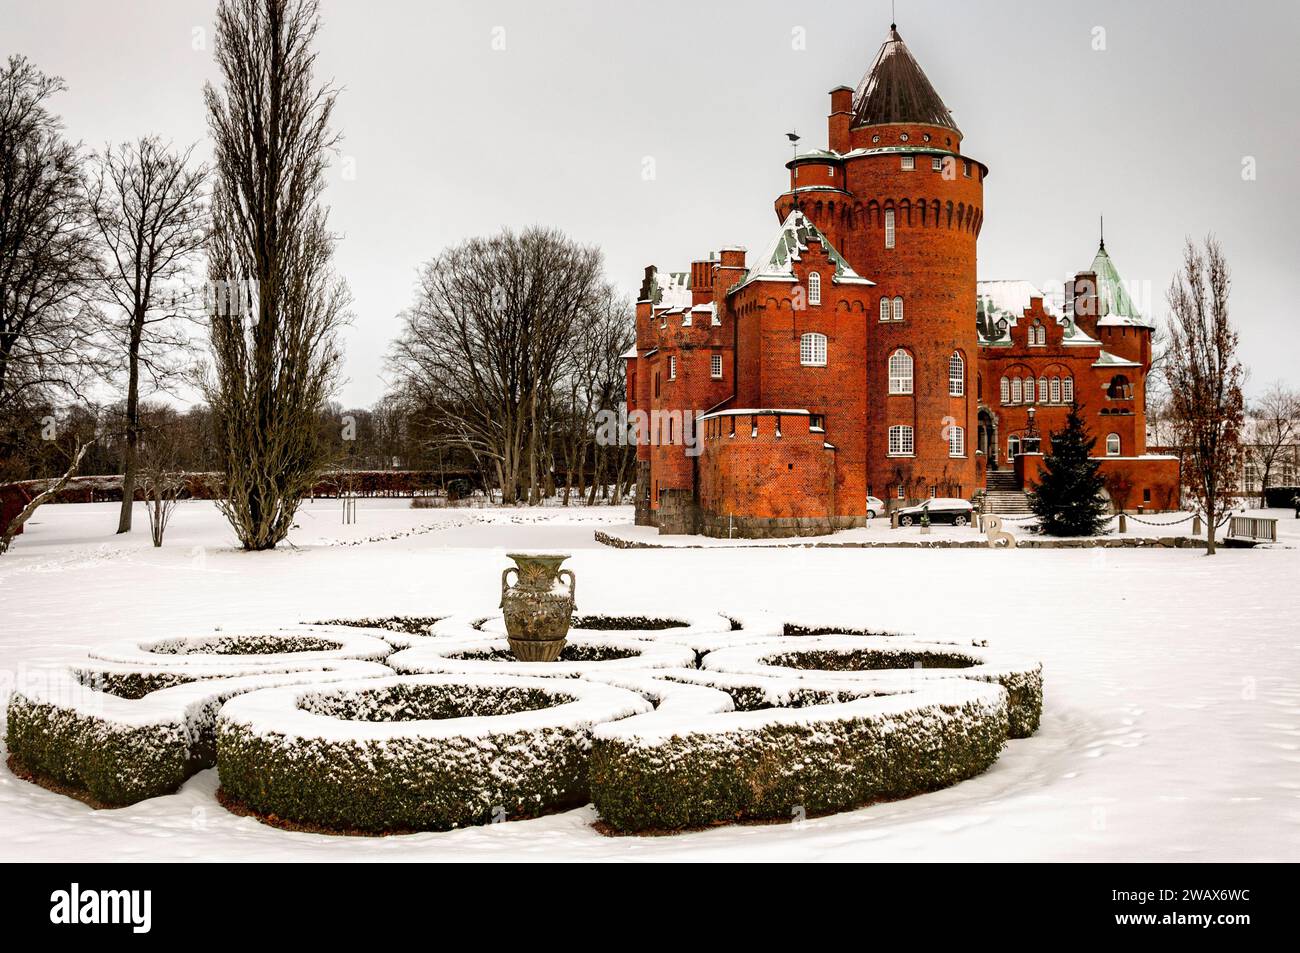 ESLOV, SCHWEDEN - 15. JANUAR 2016: Burg Hjularod in der Region Eslov in Südschweden im Winter. Stockfoto